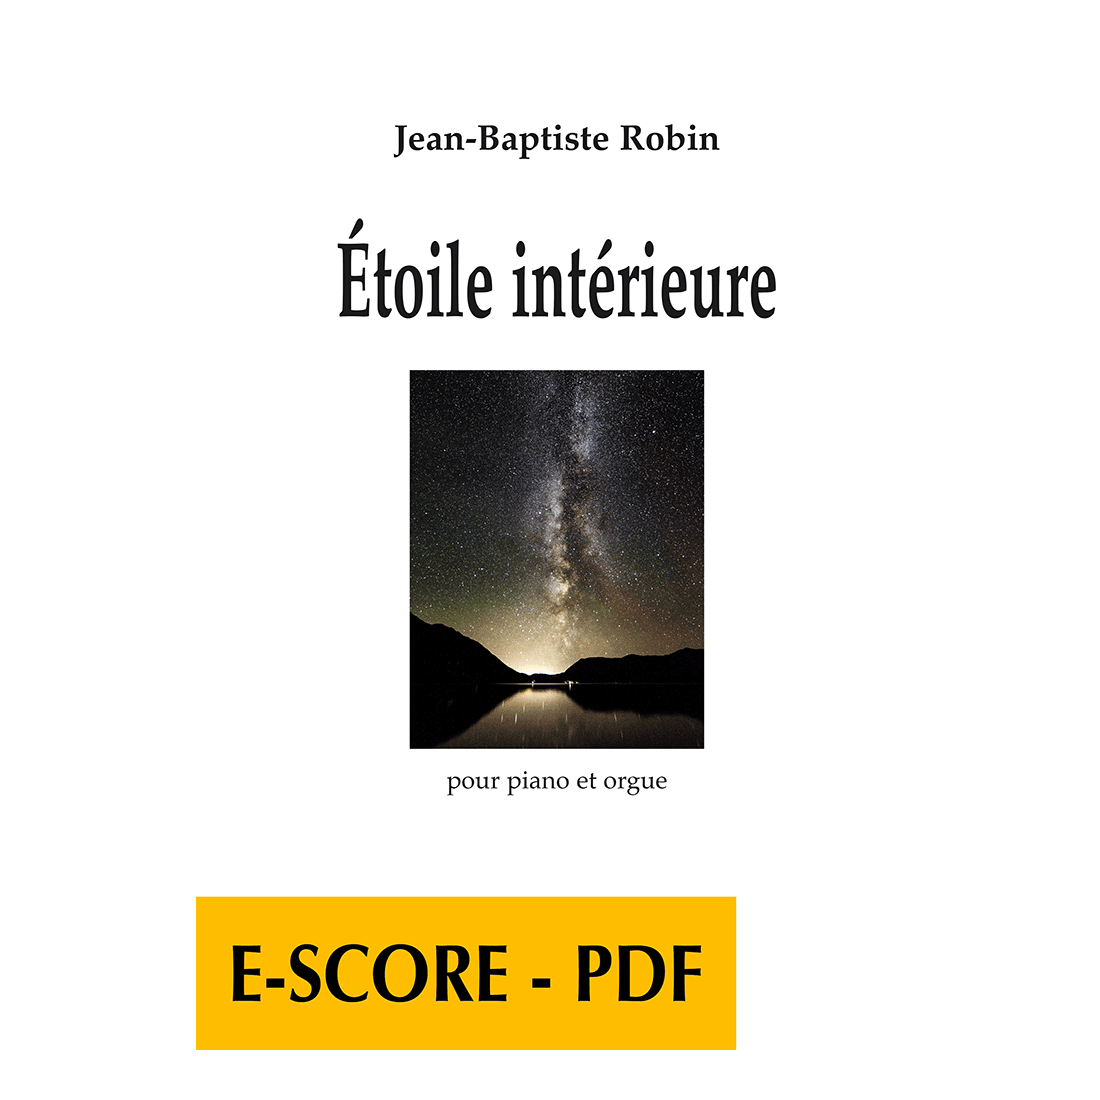 Etoile intérieure for piano and organ - E-score PDF